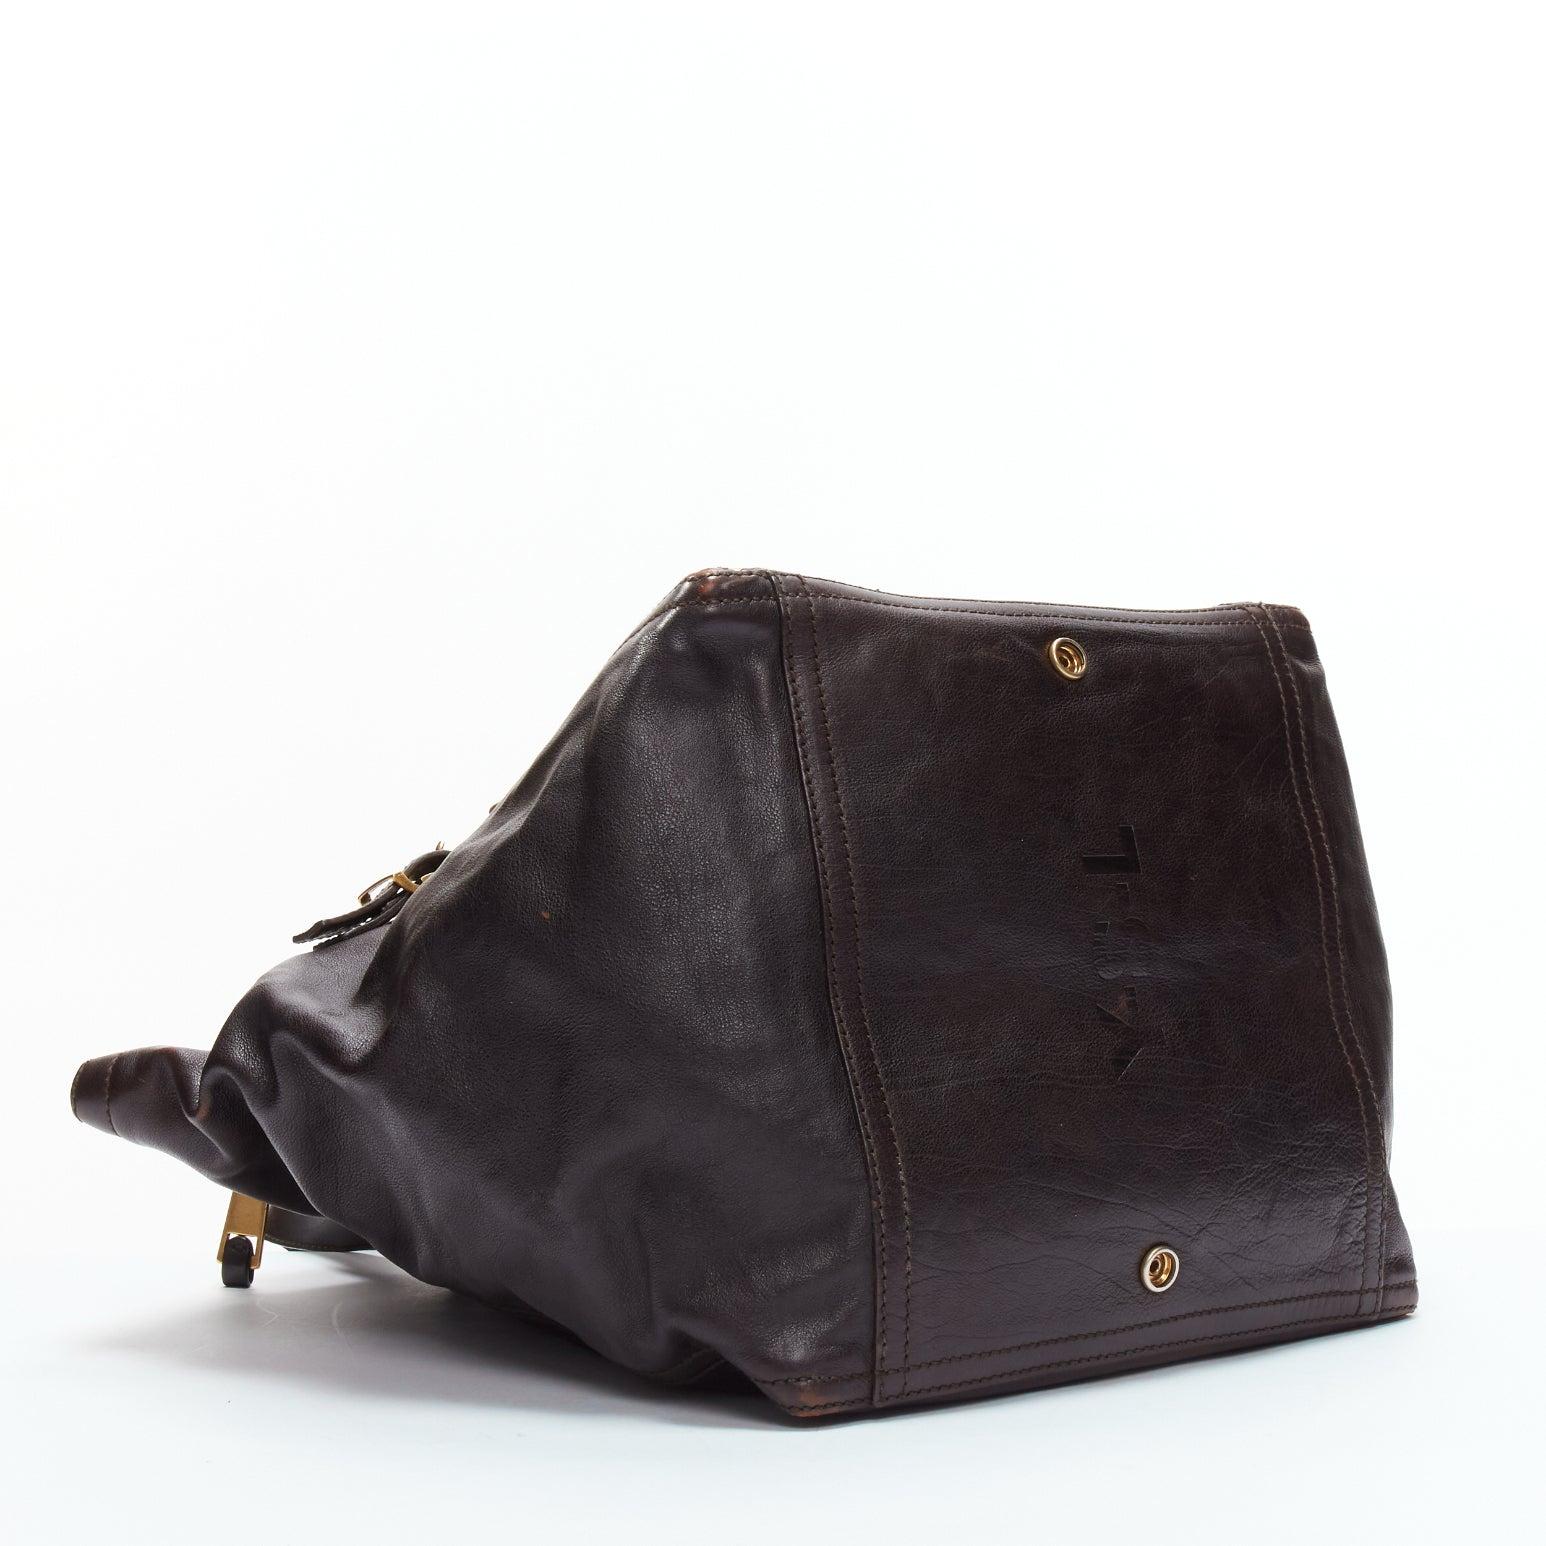 YVES SAINT LAURENT Rive Gauche Downtown dark brown leather GHW tote bag 3